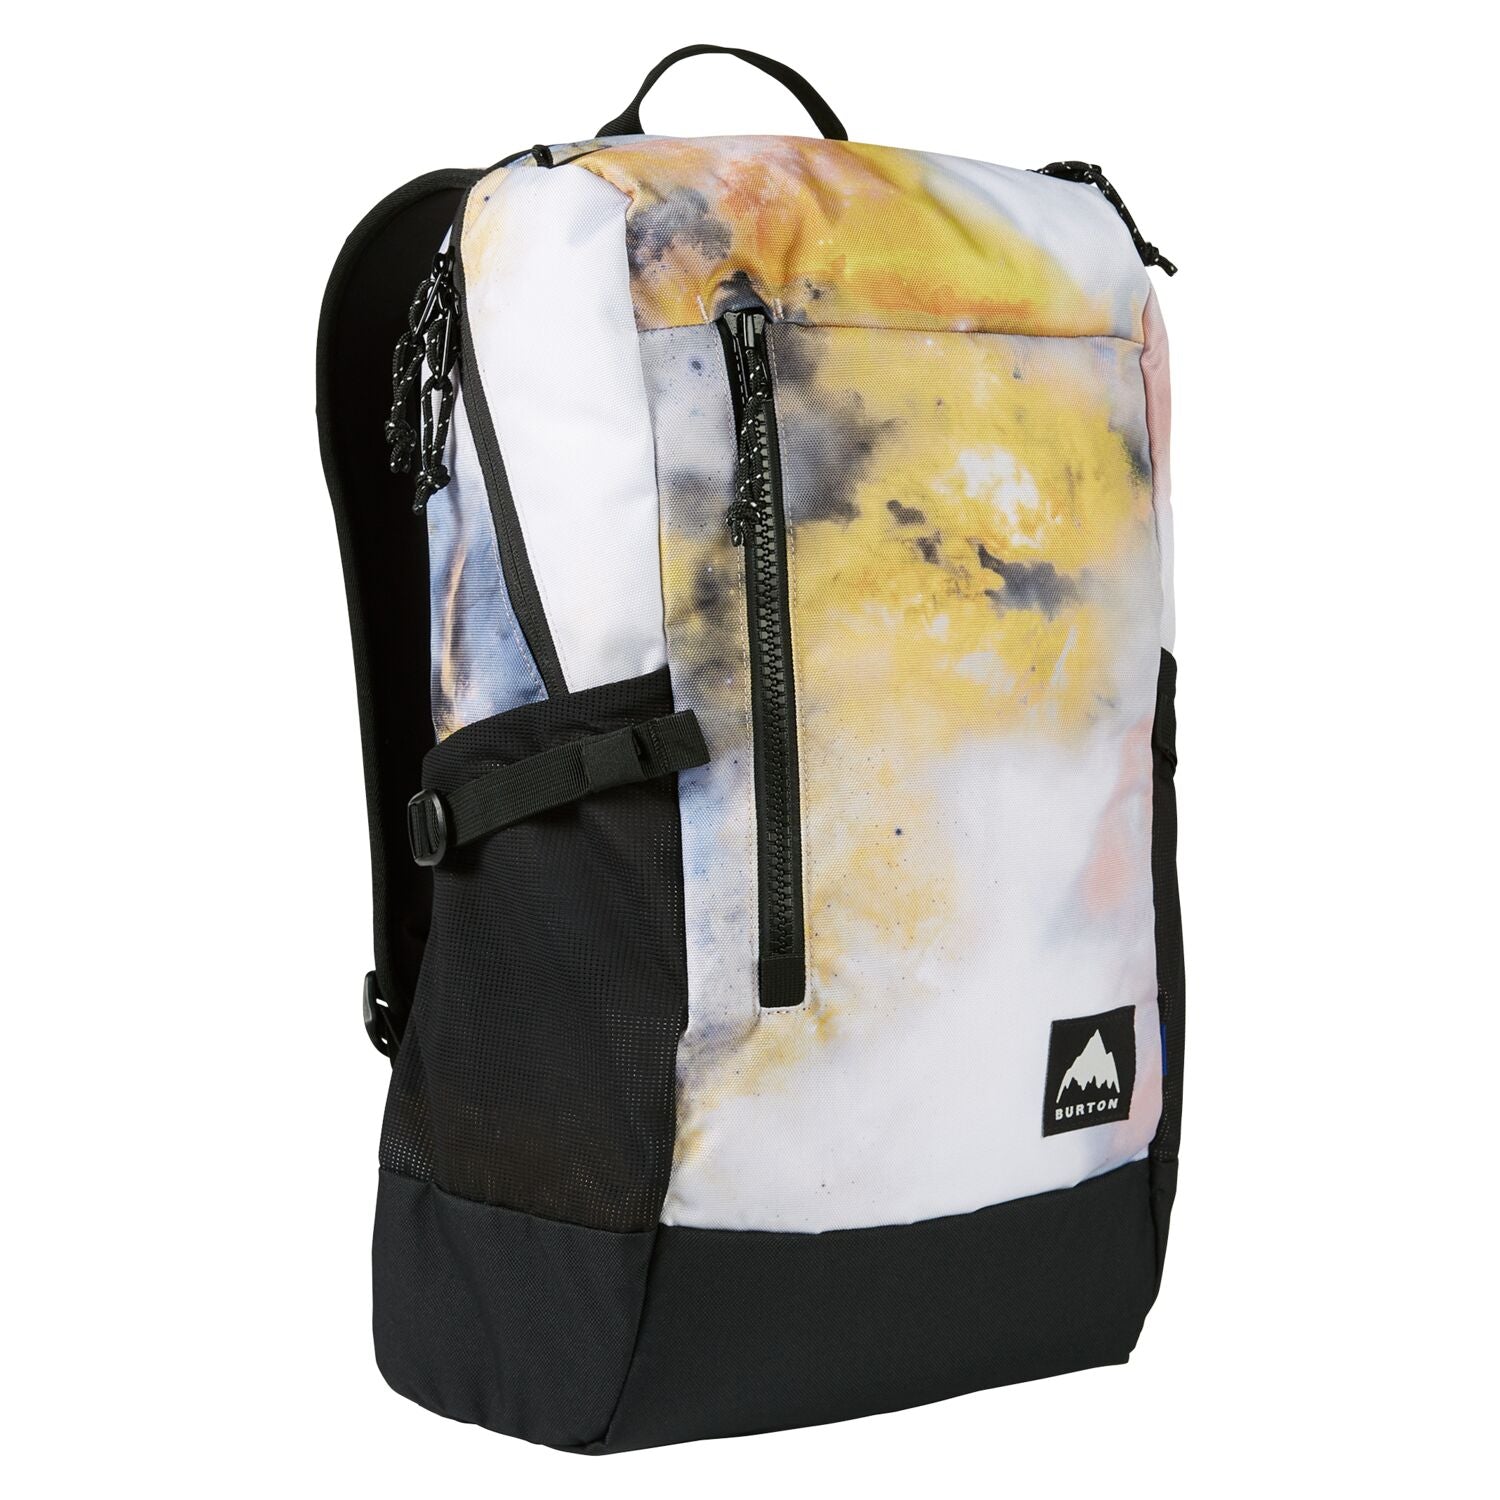 Prospect 2.0 20L Backpack - Stout White Voyager